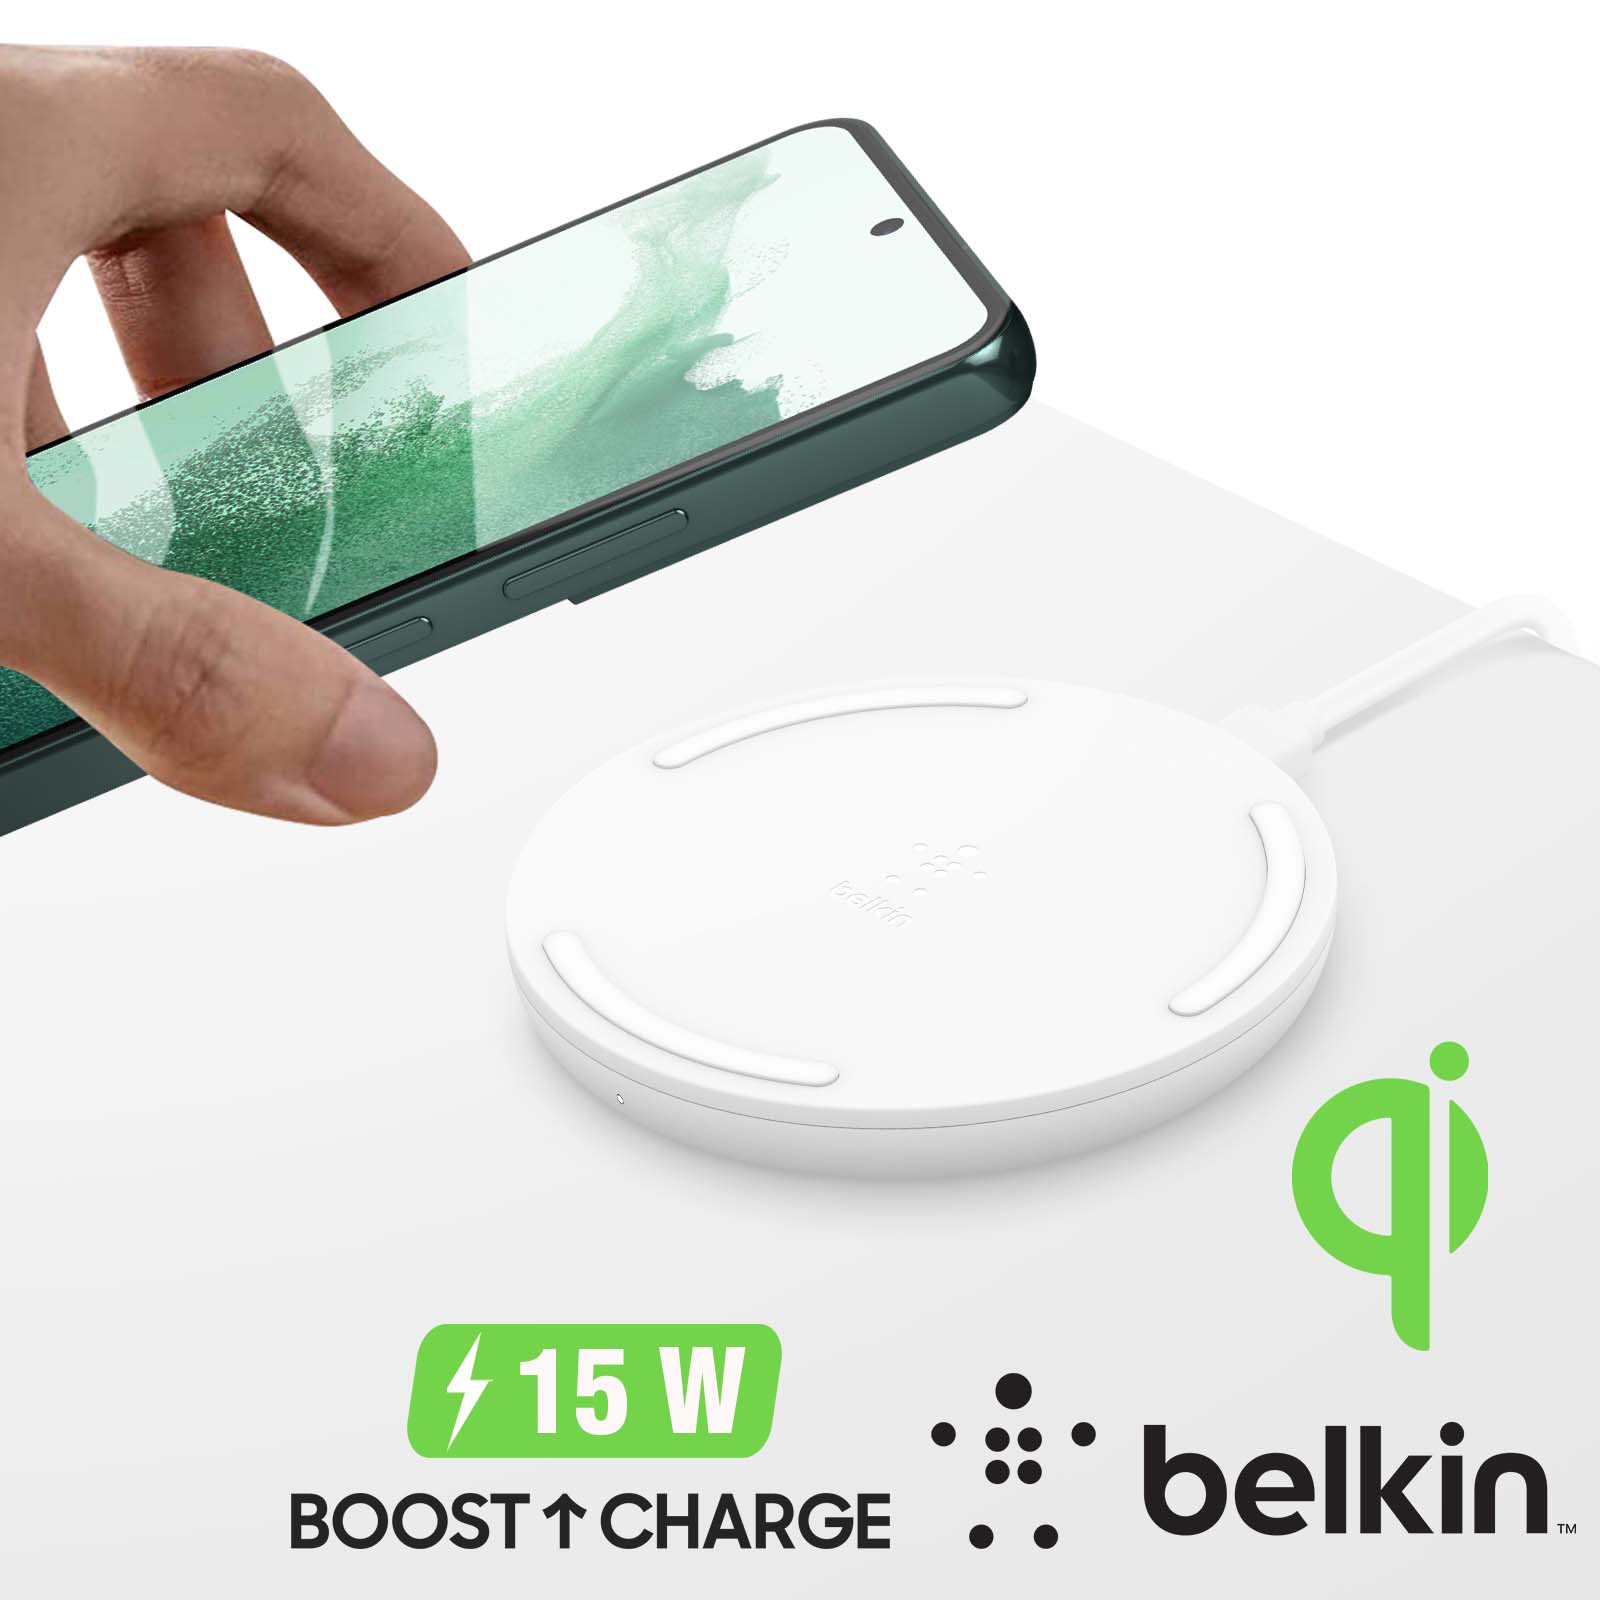 Base de carga inalámbrica Belkin BoostCharge 15 W Negro + Cargador de pared  QC 3.0 24 W - Cargador para teléfono móvil